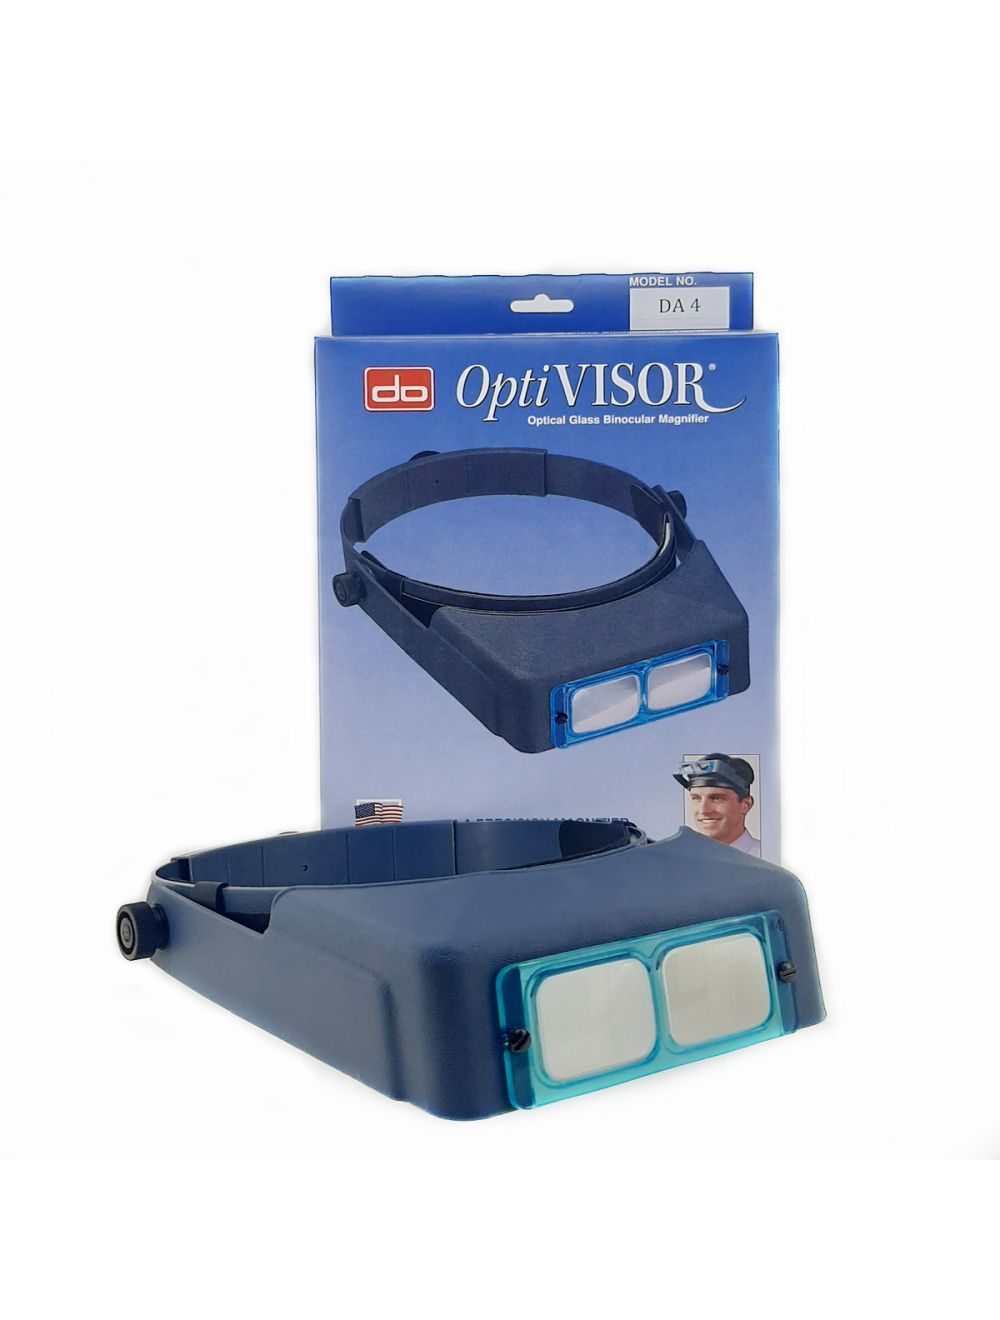 Donegan Optical - Optivisor Binocular Magnifier